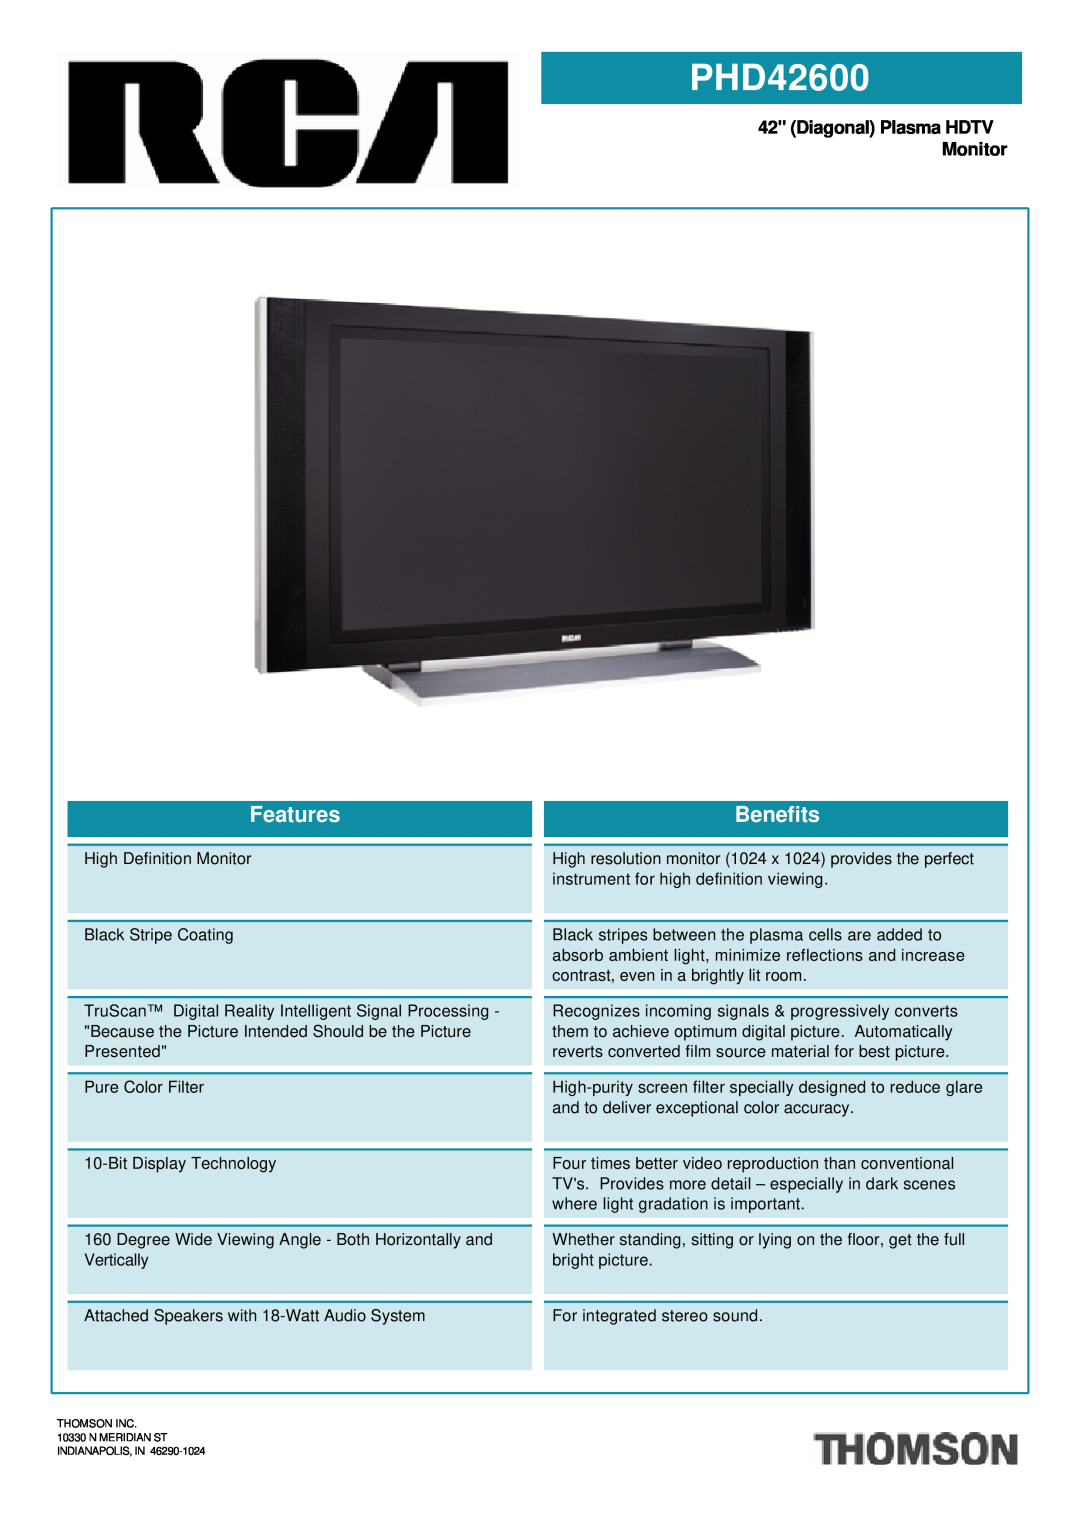 RCA RCR160TKLM1 manual PHD42600, Diagonal Plasma HDTV Monitor, Features, Benefits 